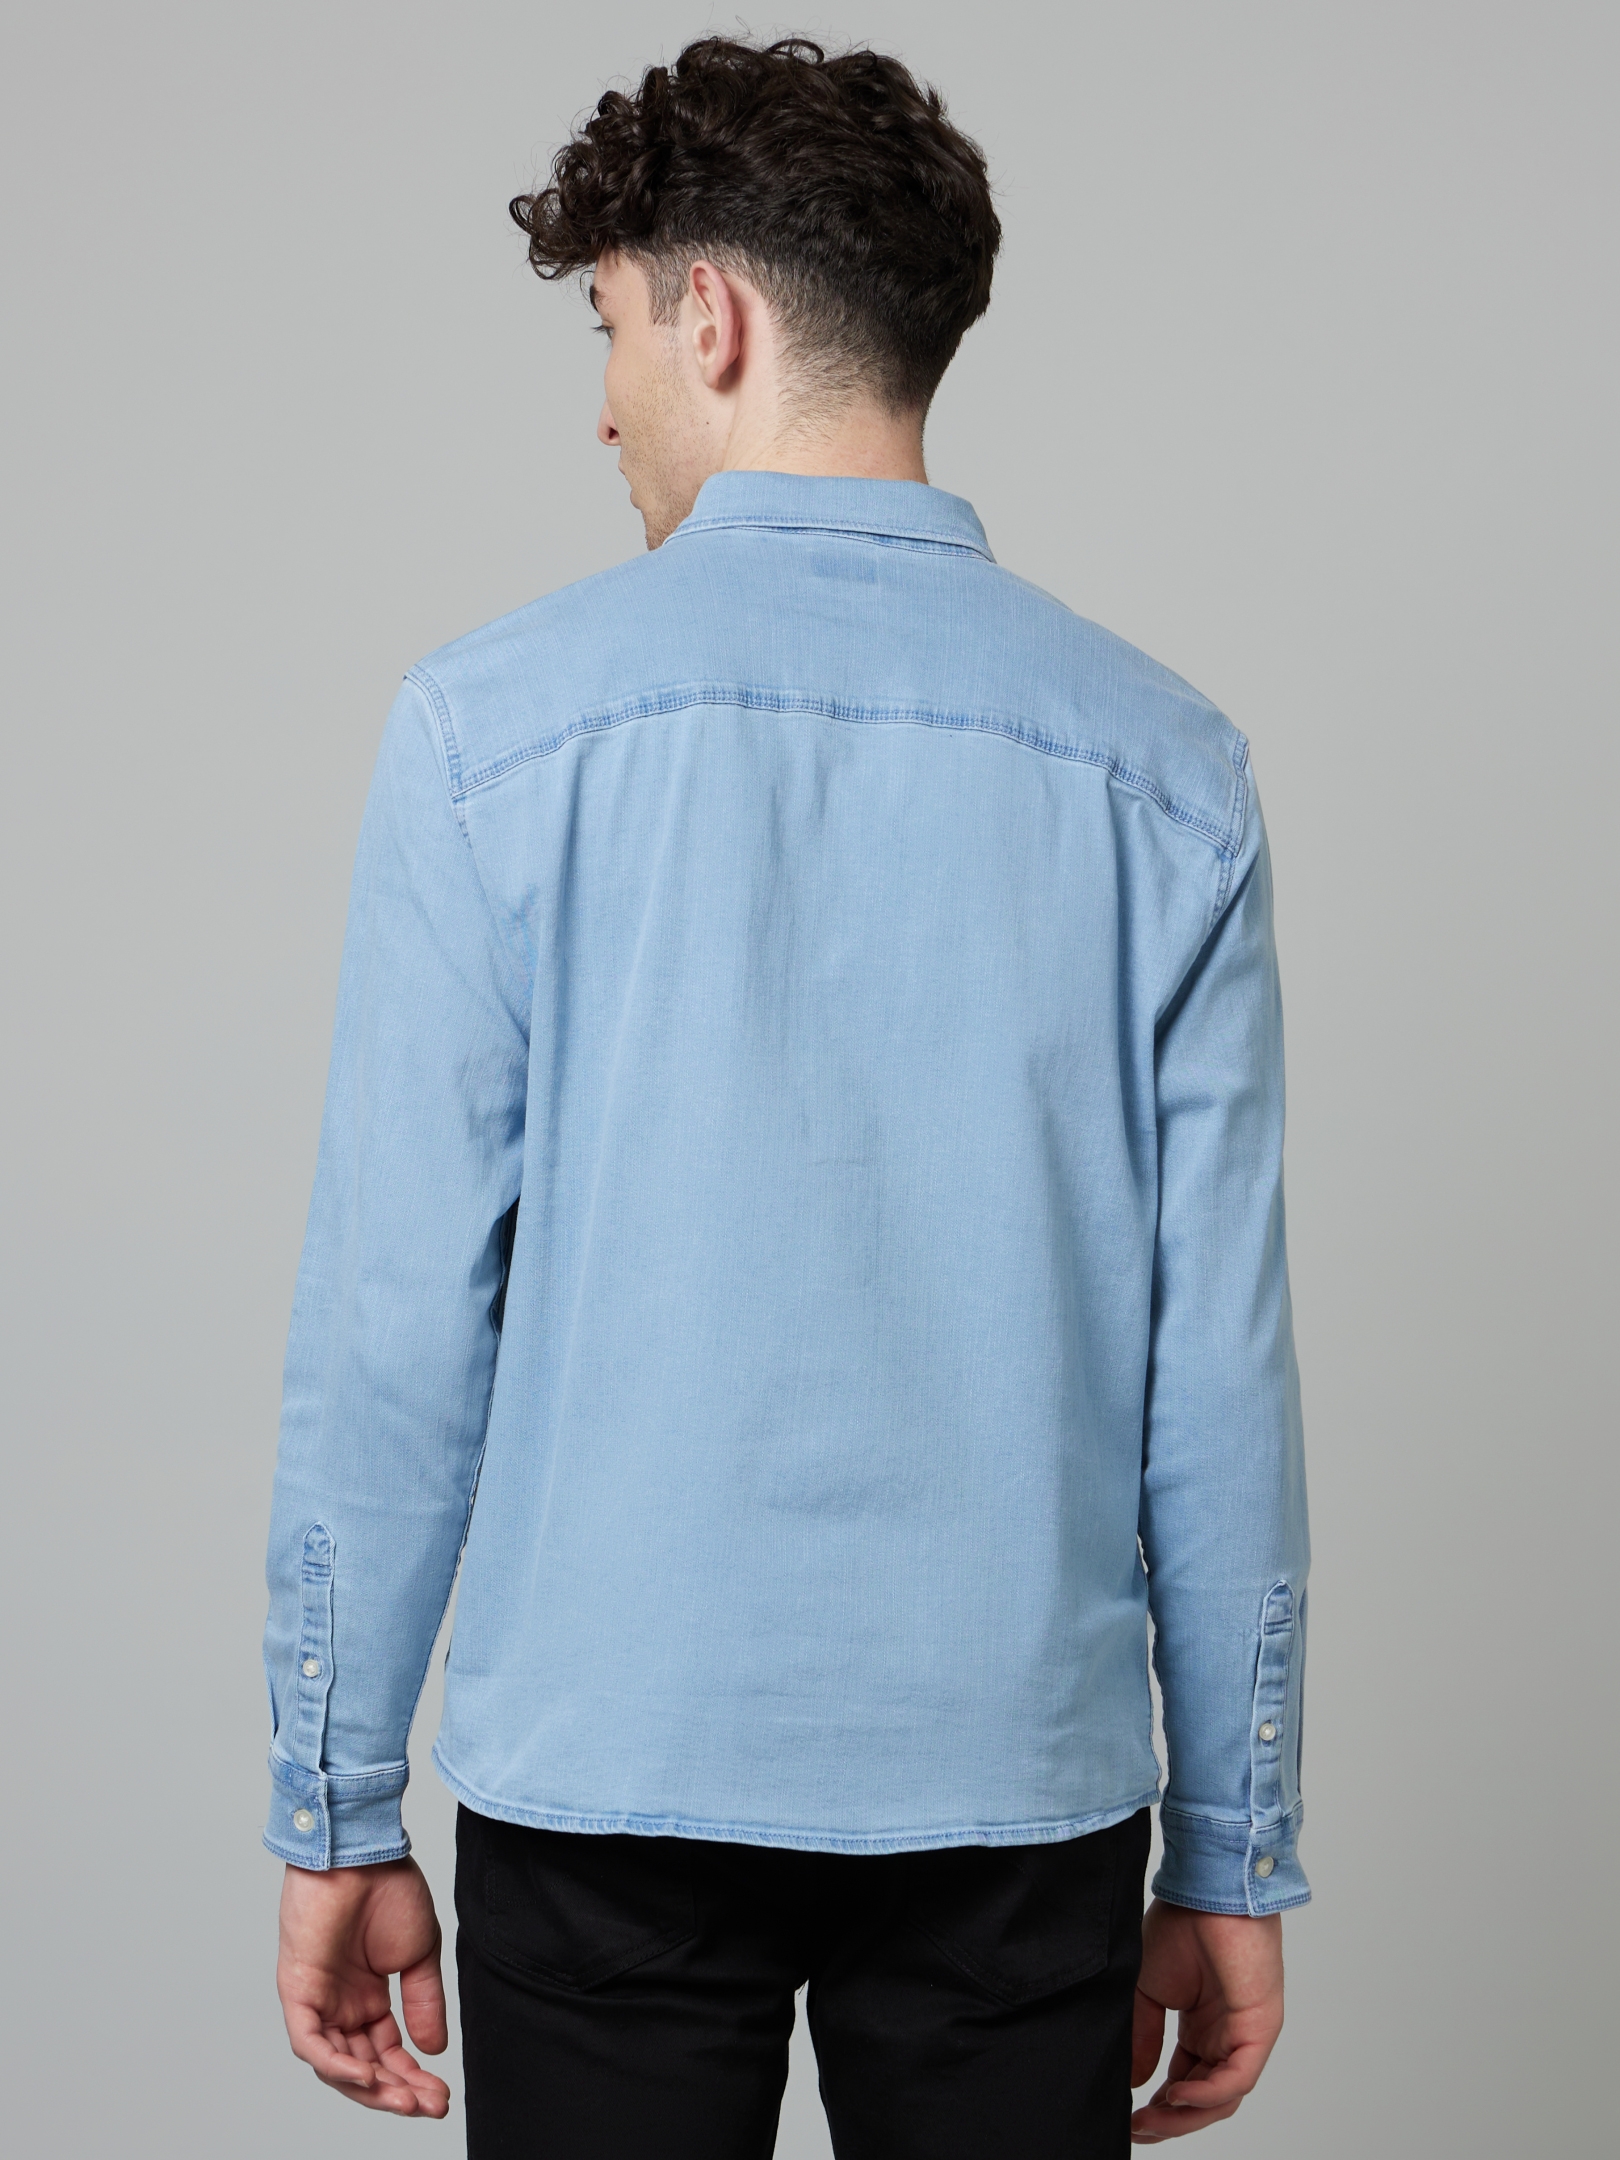 celio | Men's Blue Solid Casual Shirts 1